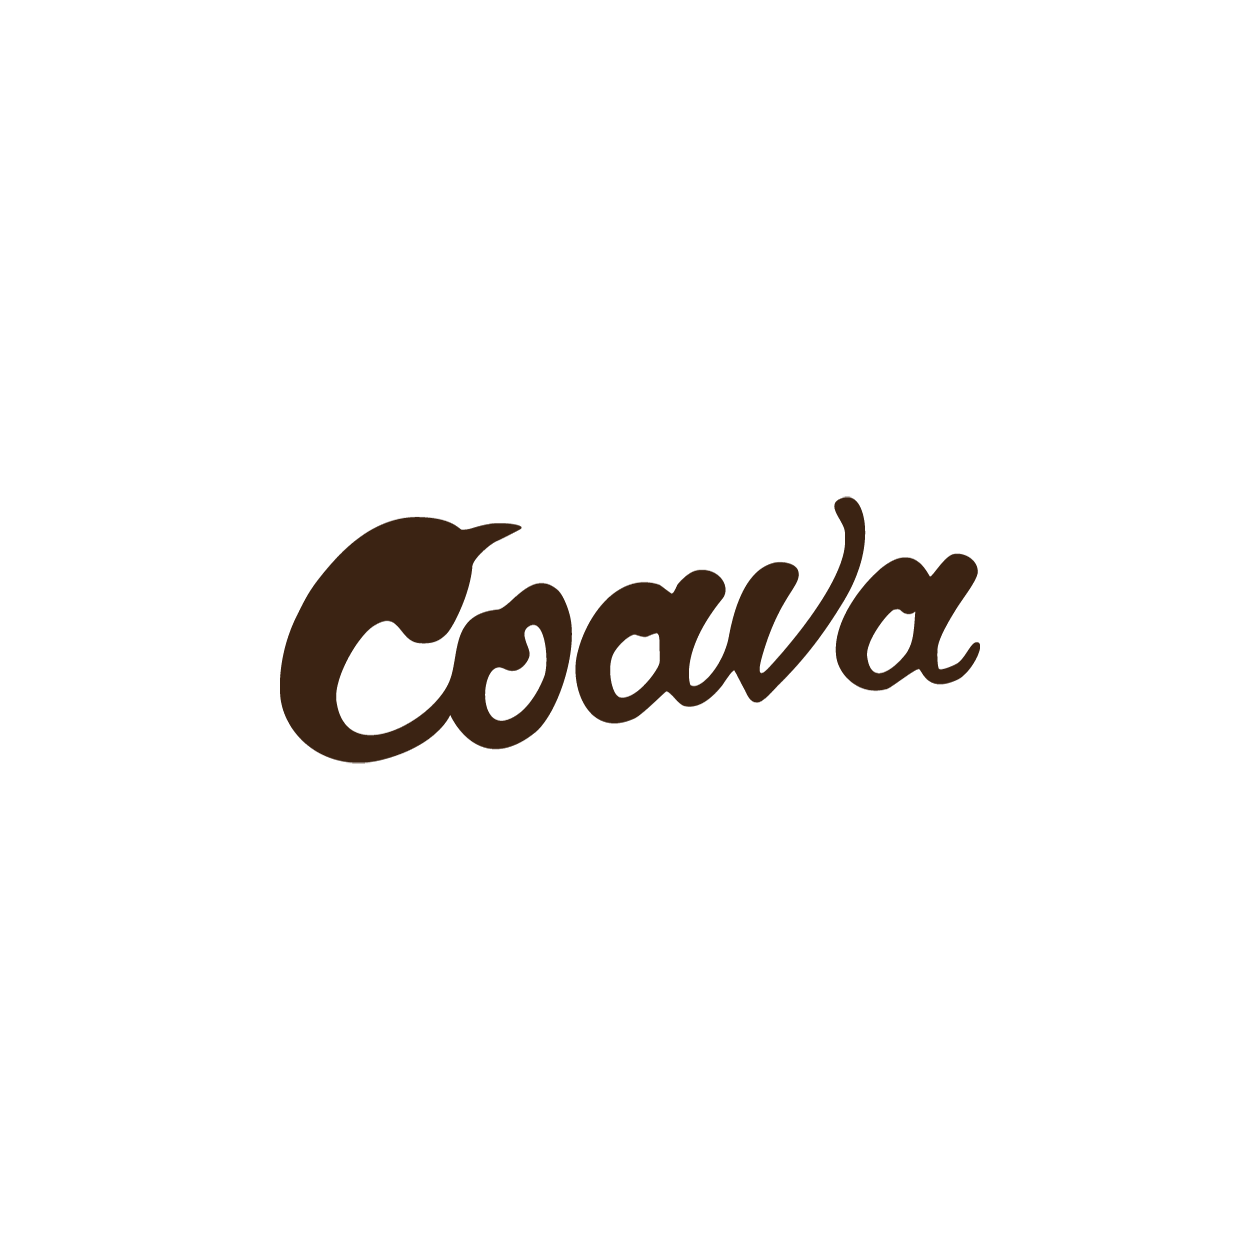 Coava Coffee Roasters